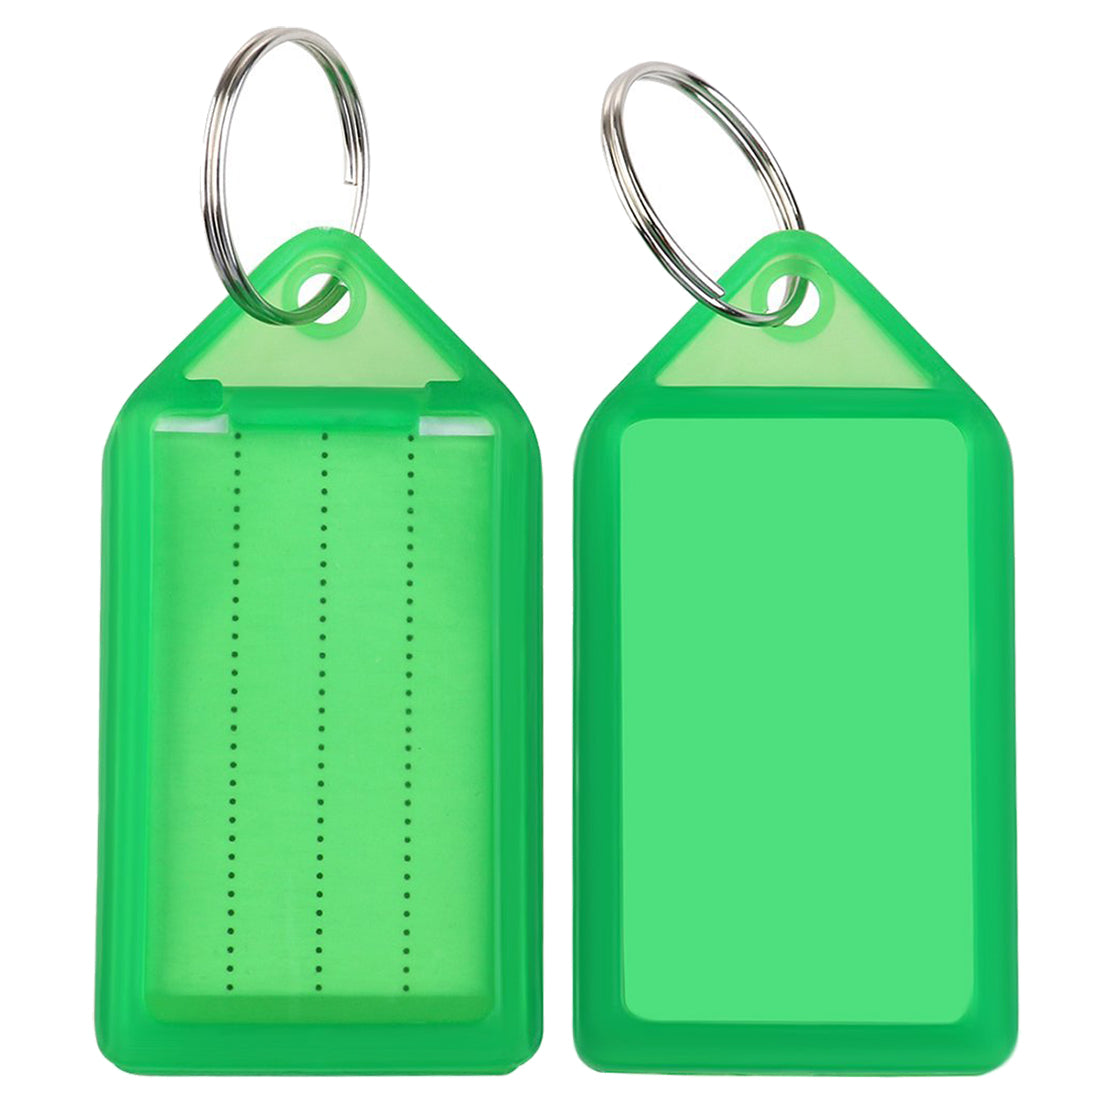 60pcs plastic Slideable Key Fobs Luggage Tags with Key Rings Random Color - ebowsos